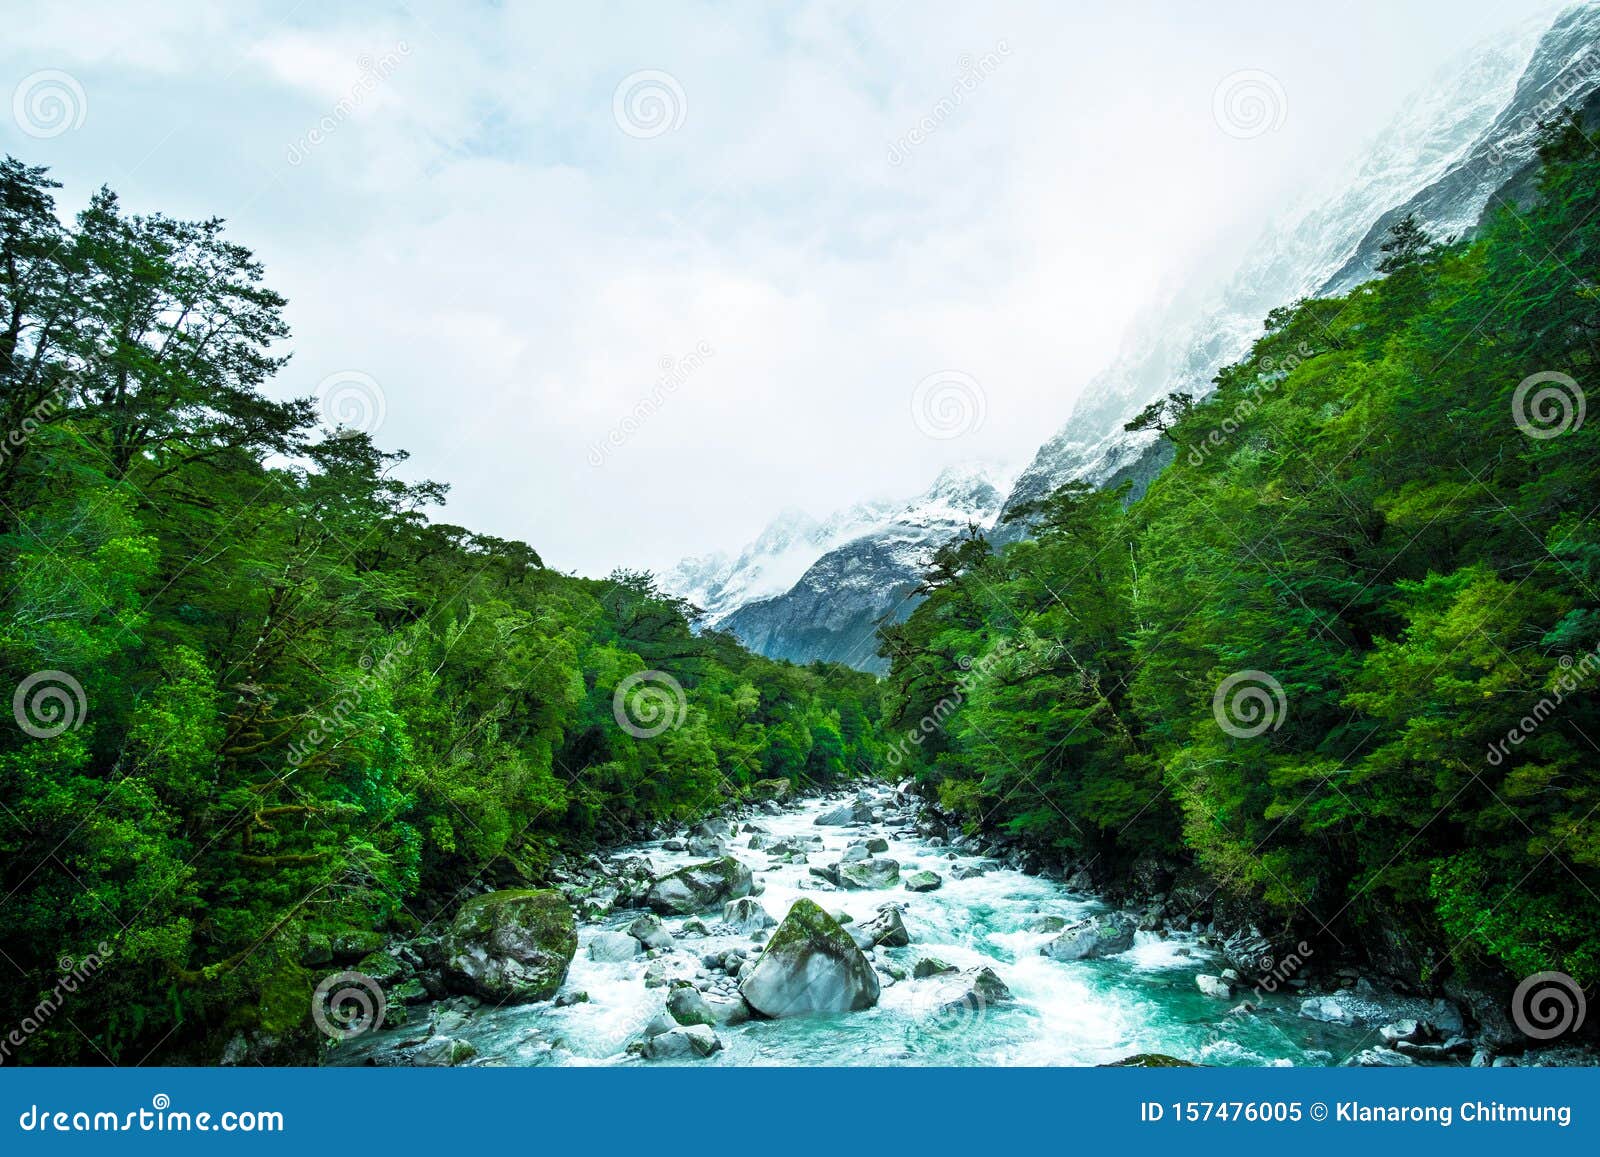 a blue glacier river among the green nature. i